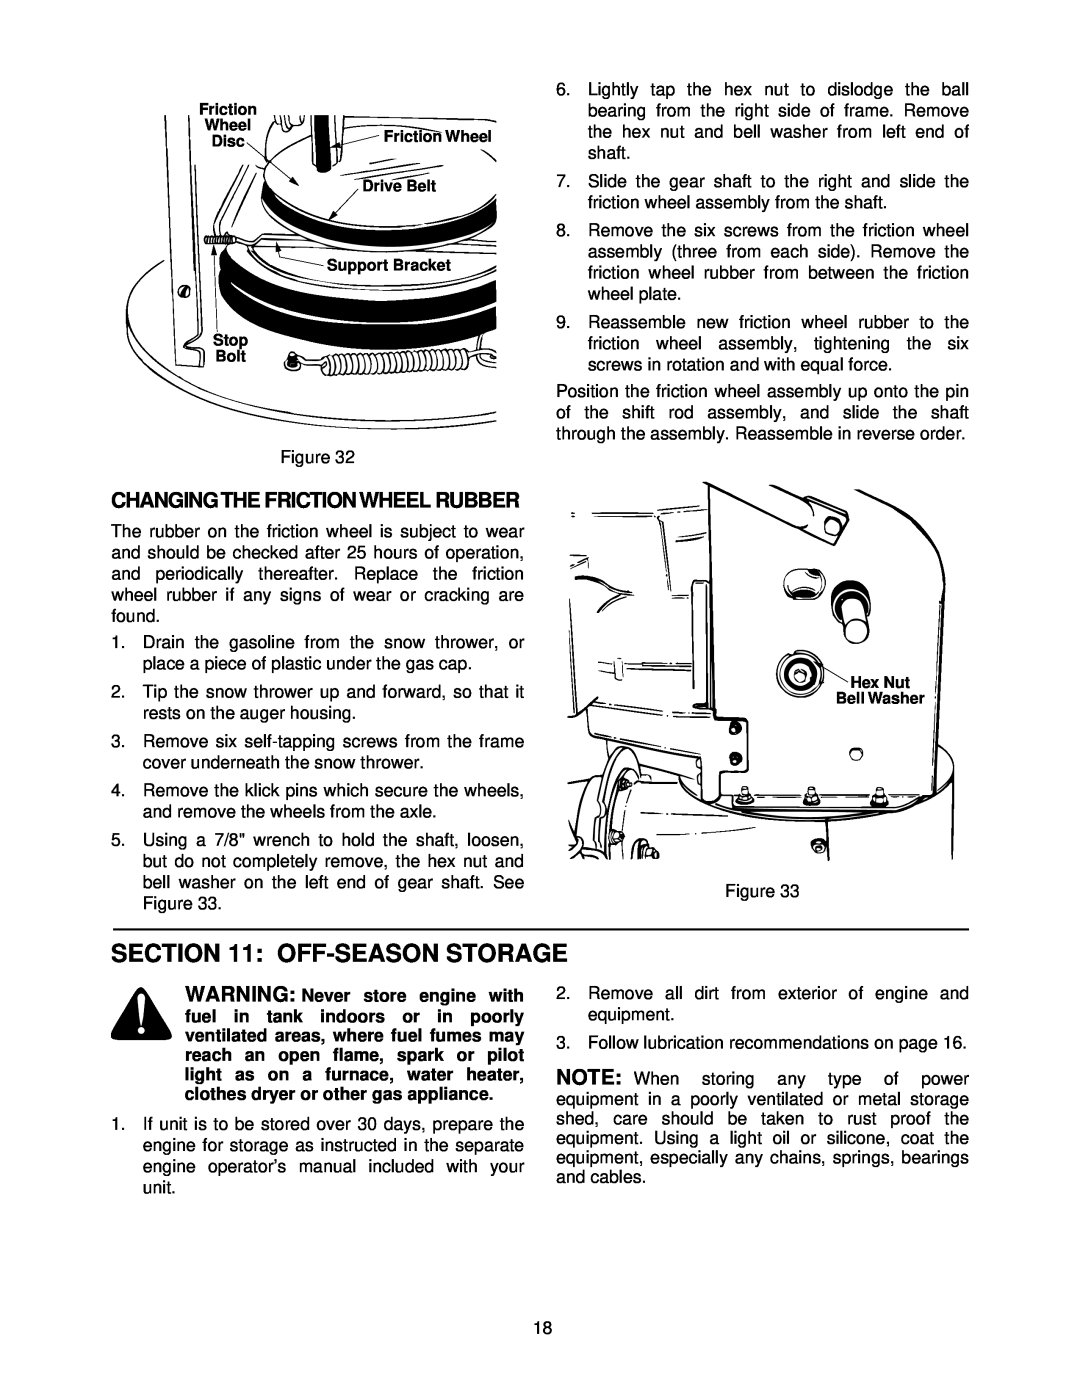 MTD E602E, E662E, E642F, E614E manual Off-Seasonstorage, Changingthe Friction Wheel Rubber 